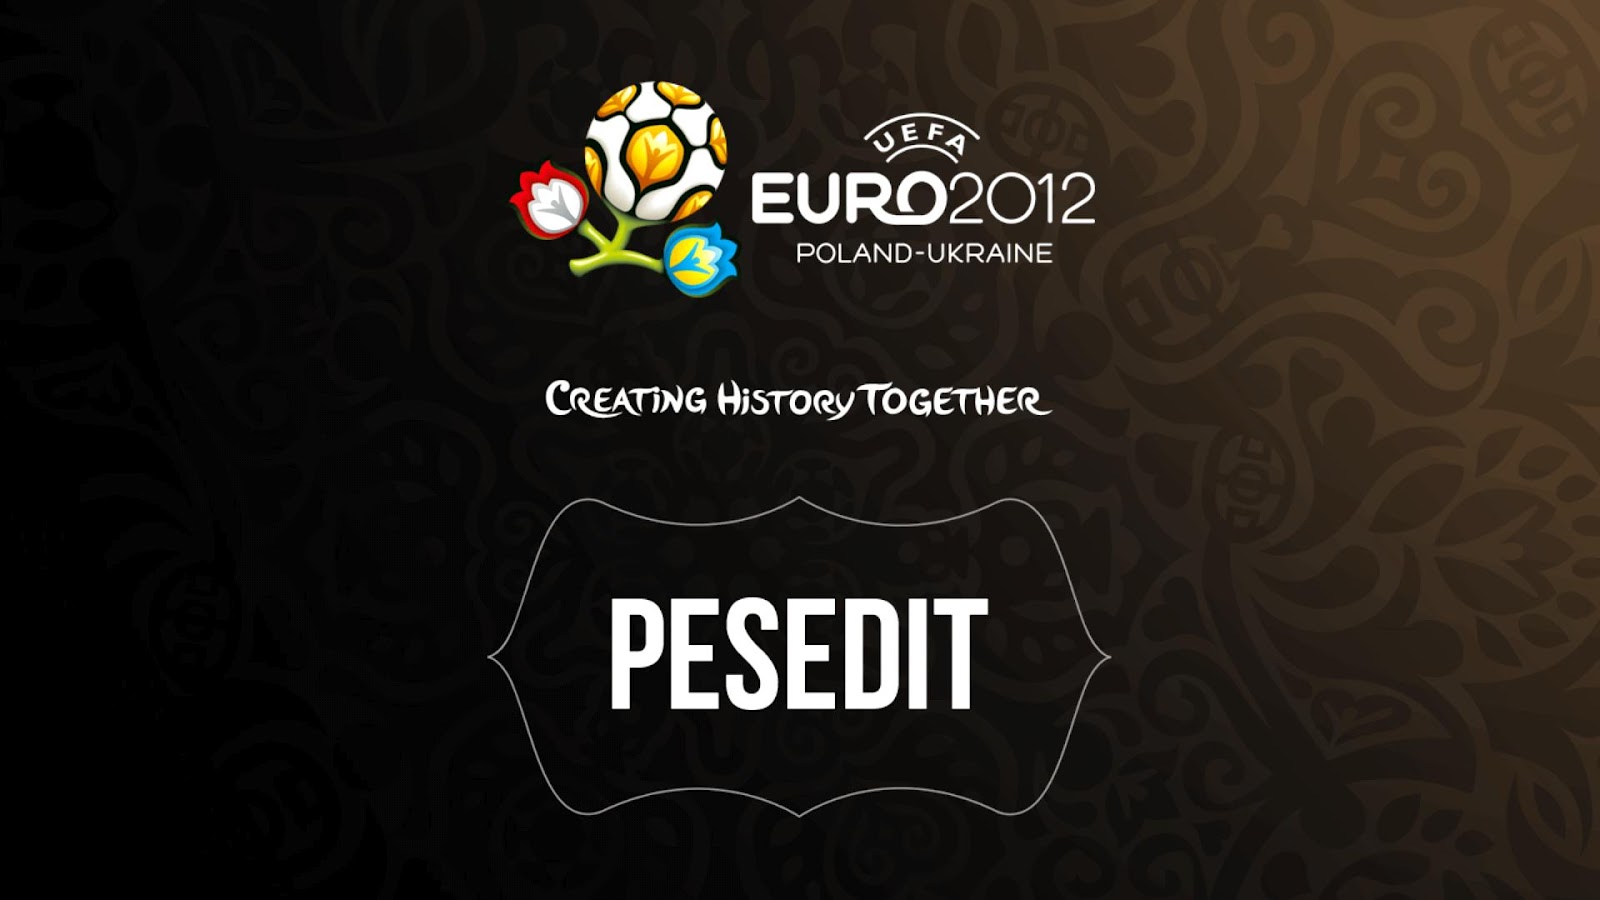 UEFA EURO 2012 Poland & Ukraine Patch file - ModDB